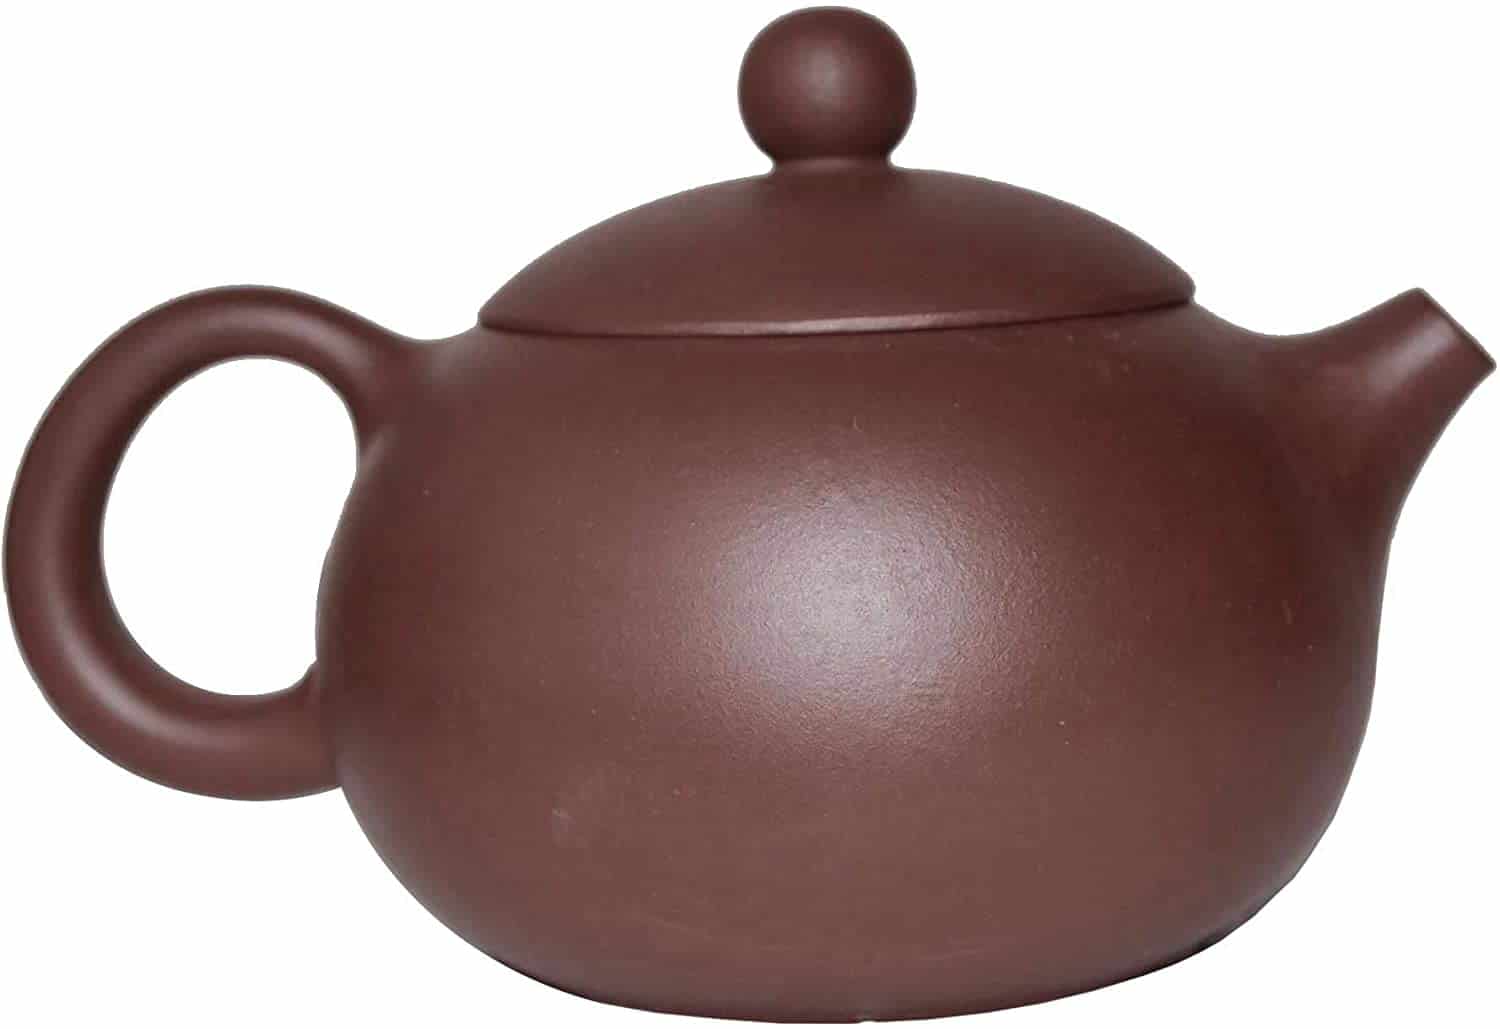 yixing teapot